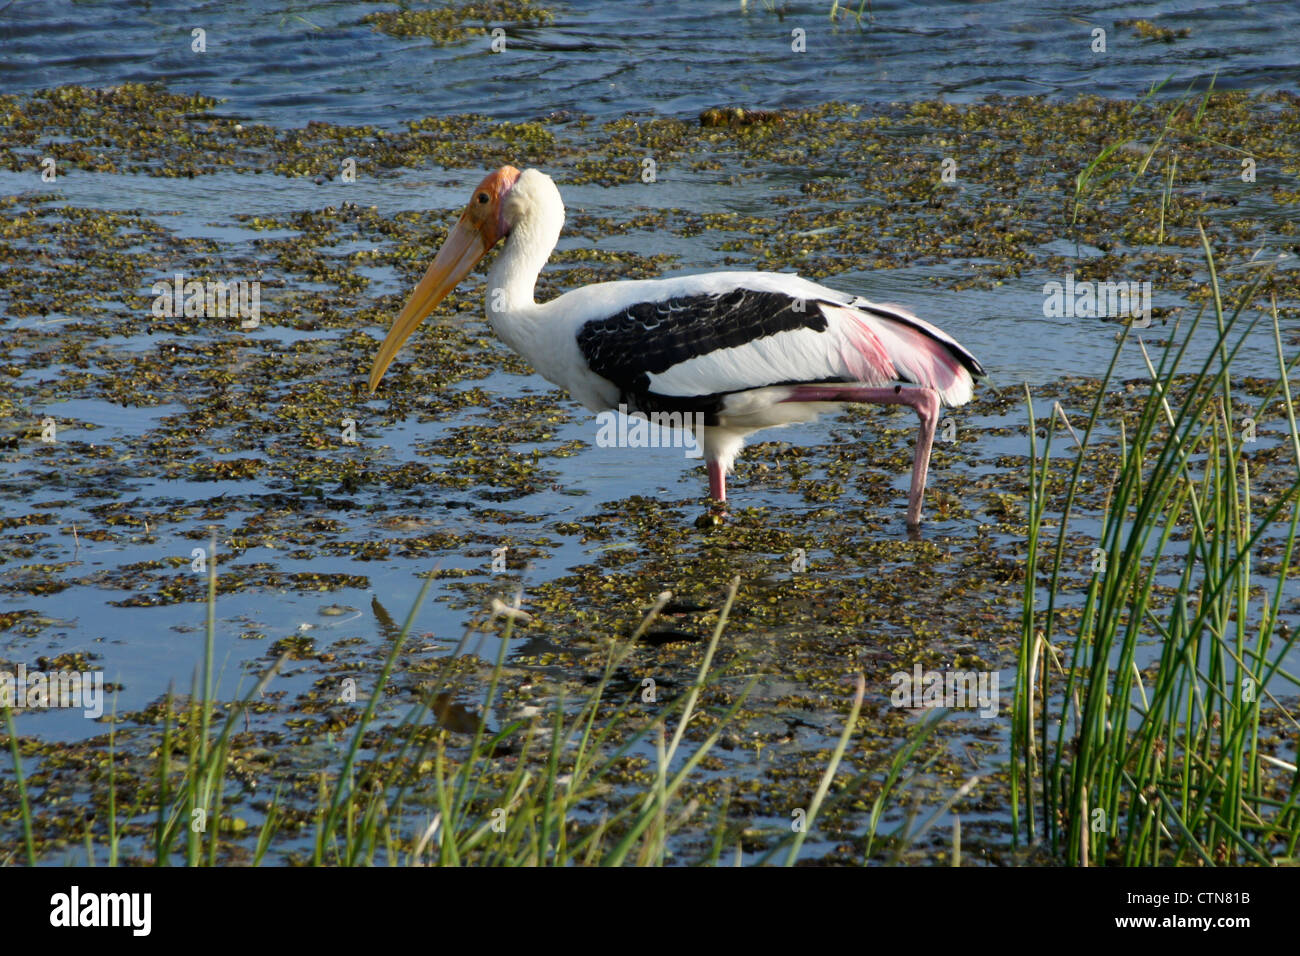 Painted stork feeding in pond, Bundala National Park, Sri Lanka Stock Photo